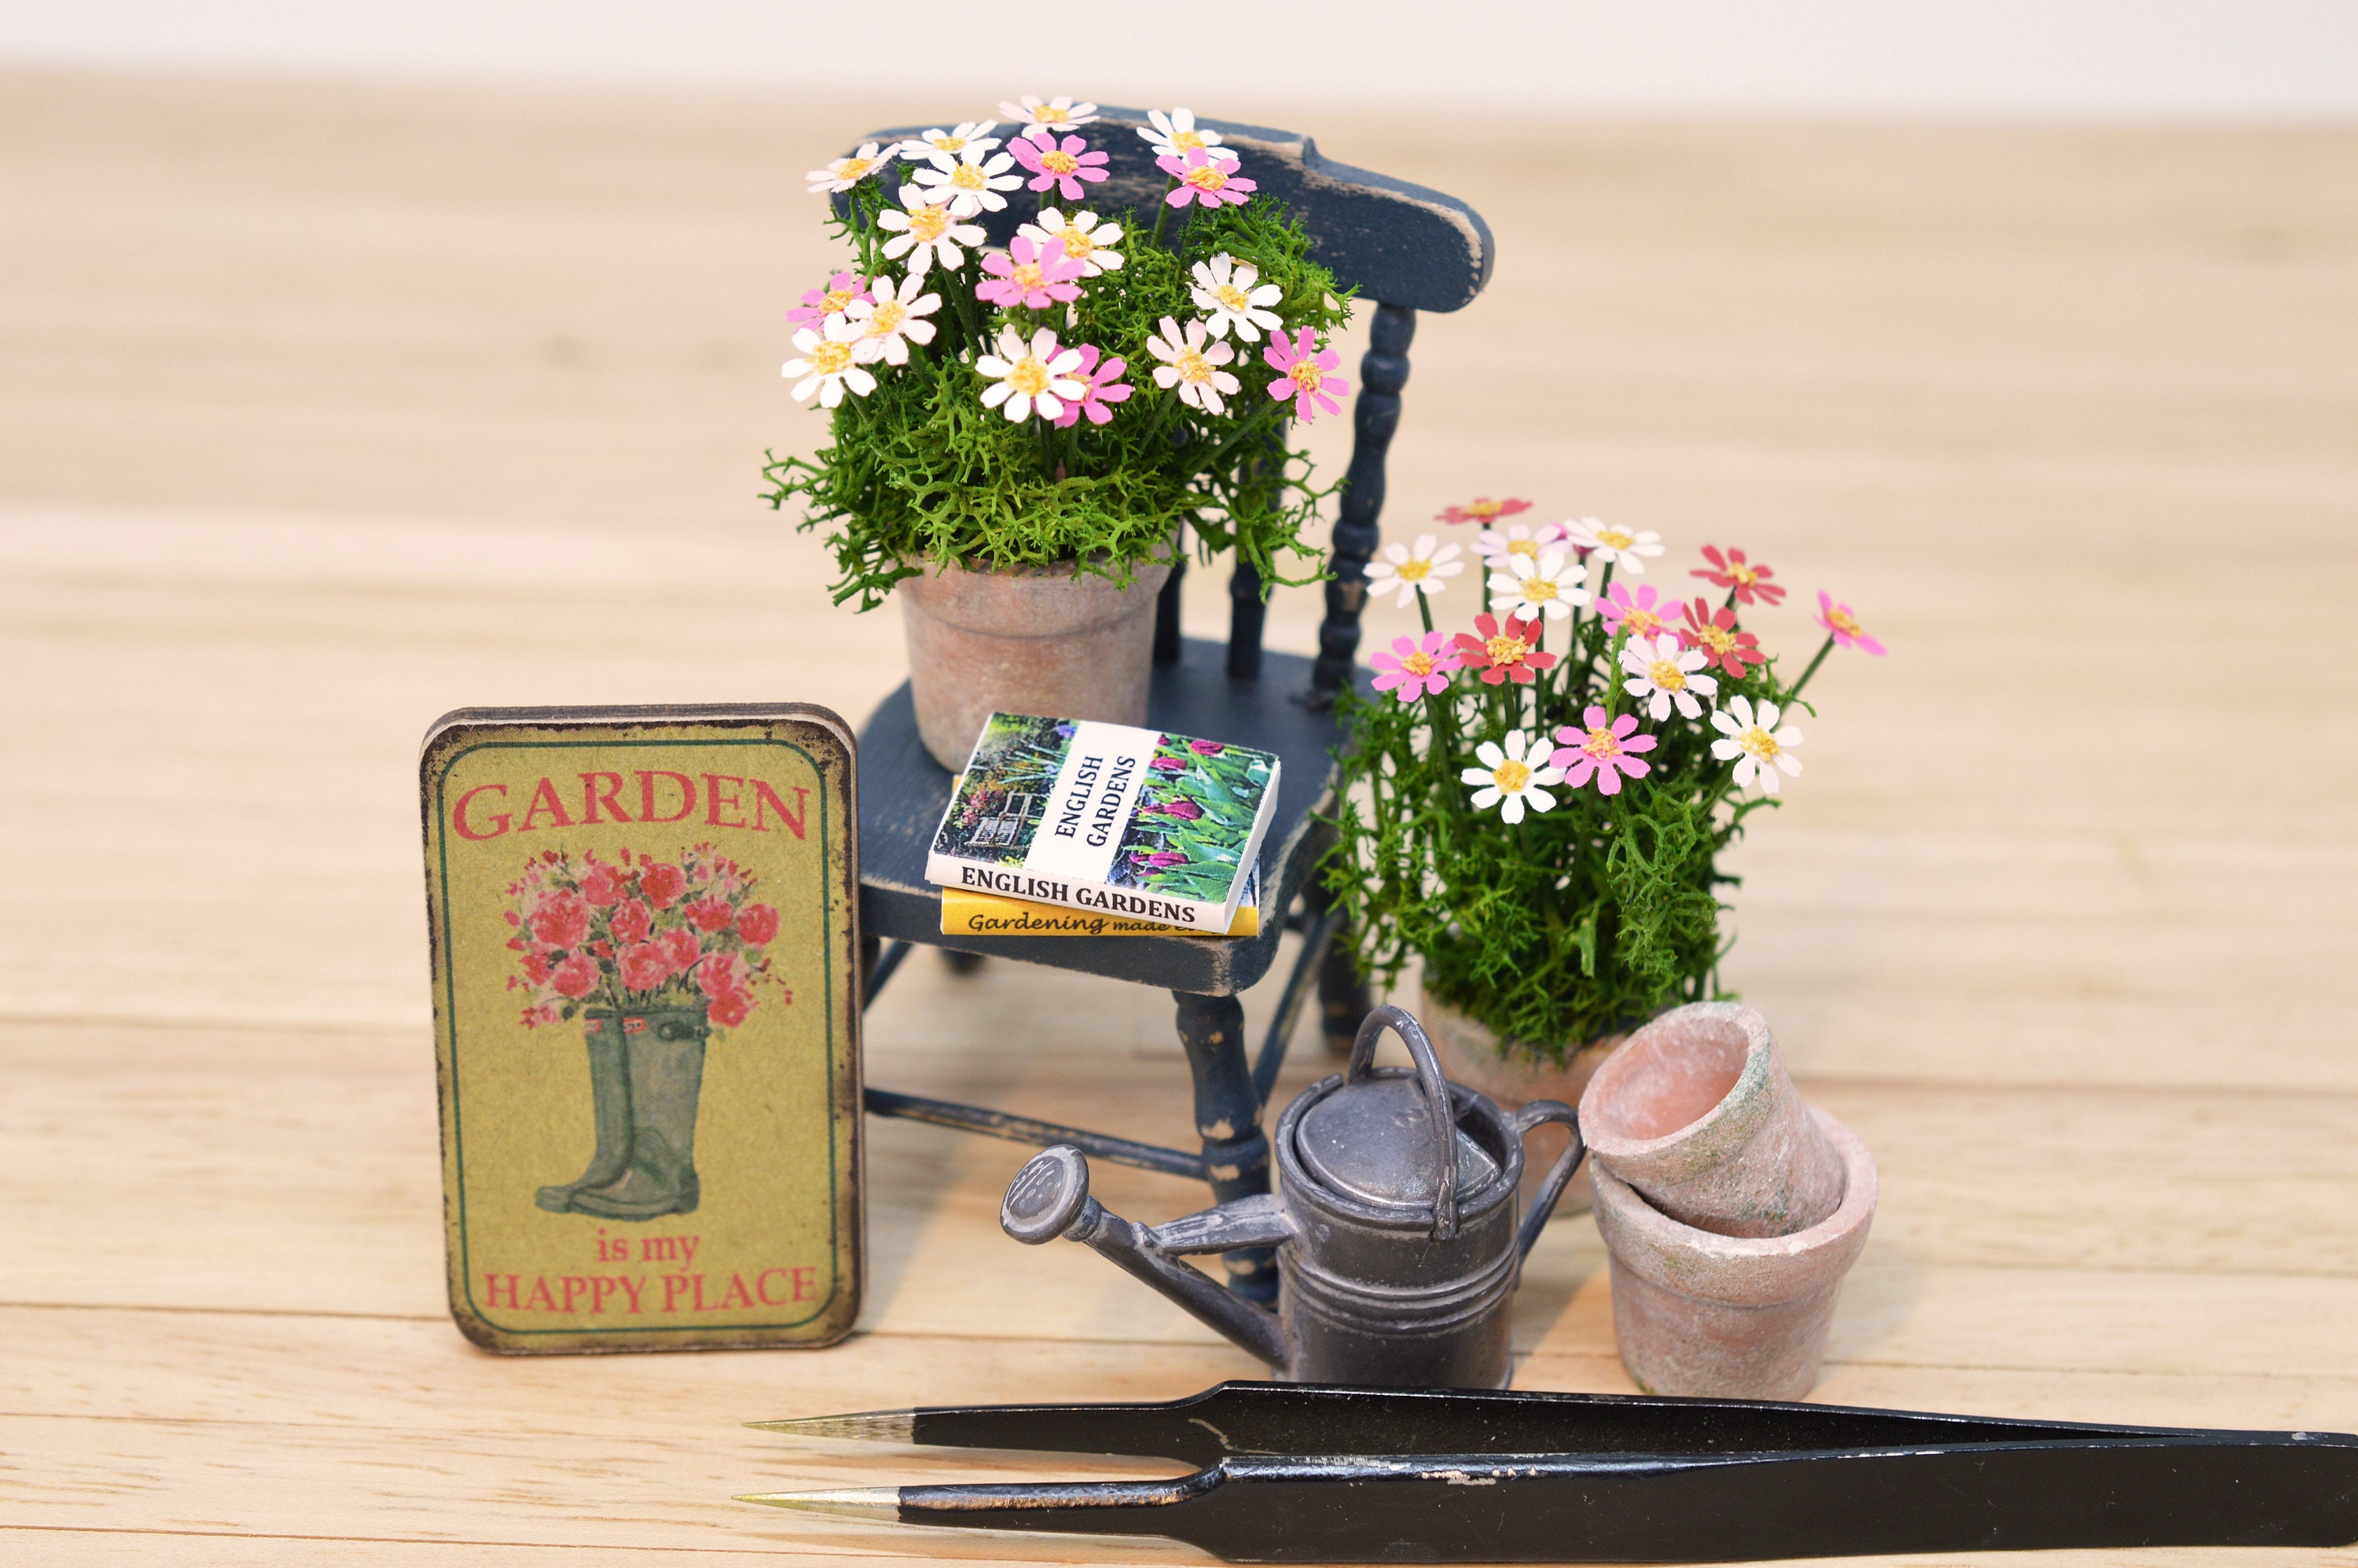 12 Miniature Cosmos Flowers Kit Flower 1:12 Scale Dolls House Garden Shed  Pot Plants Little Snowdrop Shop 